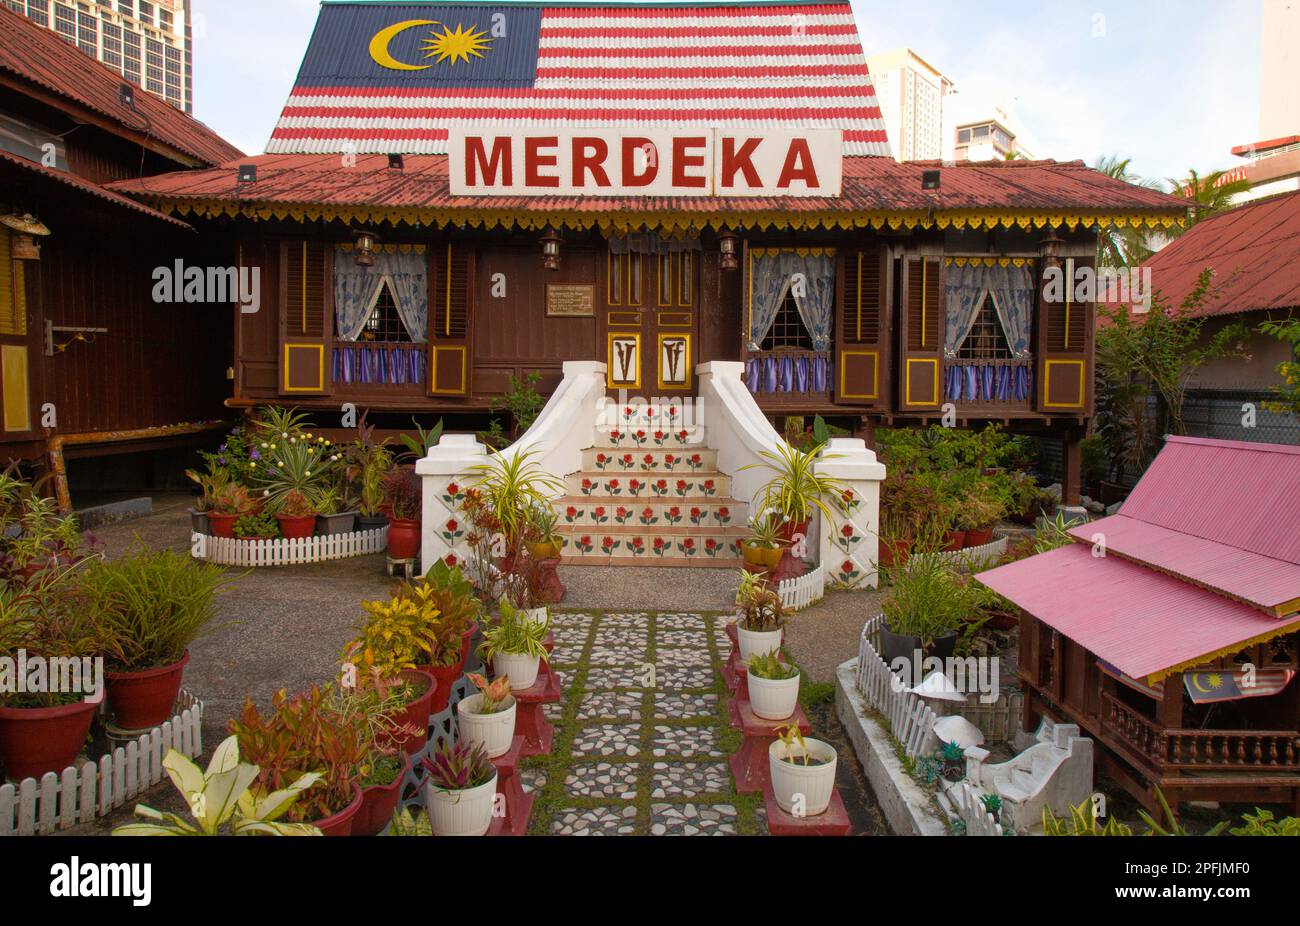 Malaysia, Melaka, Malakka, Kampung Morten, traditionelles malaiisches Dorf, Stockfoto